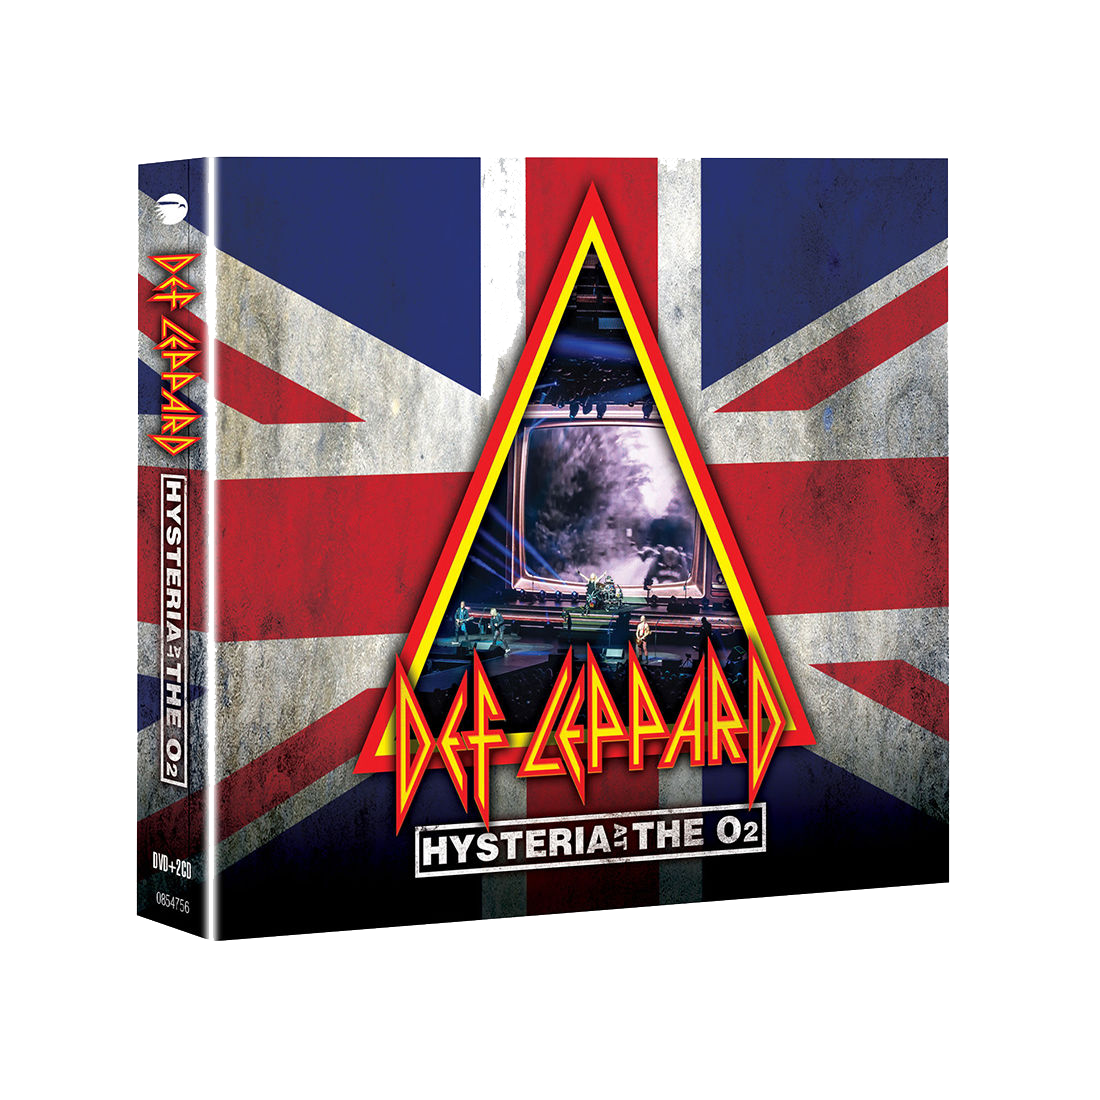 Def Leppard - Hysteria At The O2: Blu-Ray + 2CD